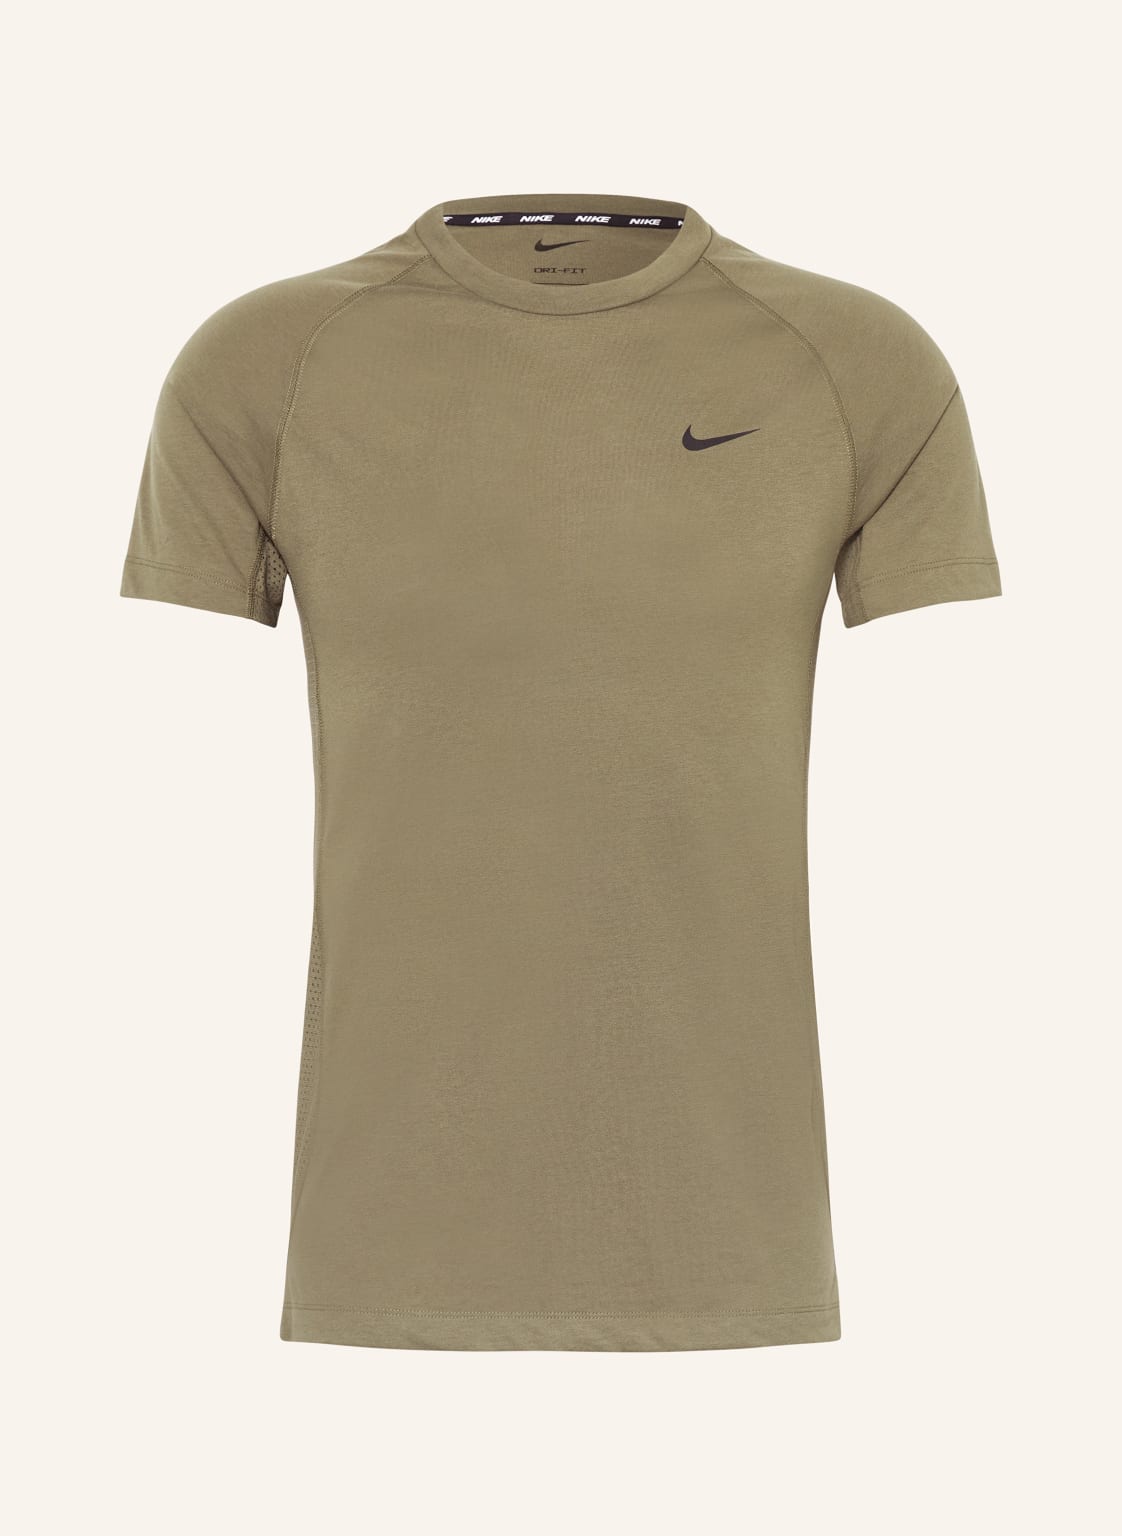 Nike T-Shirt Flex Rep gruen von Nike